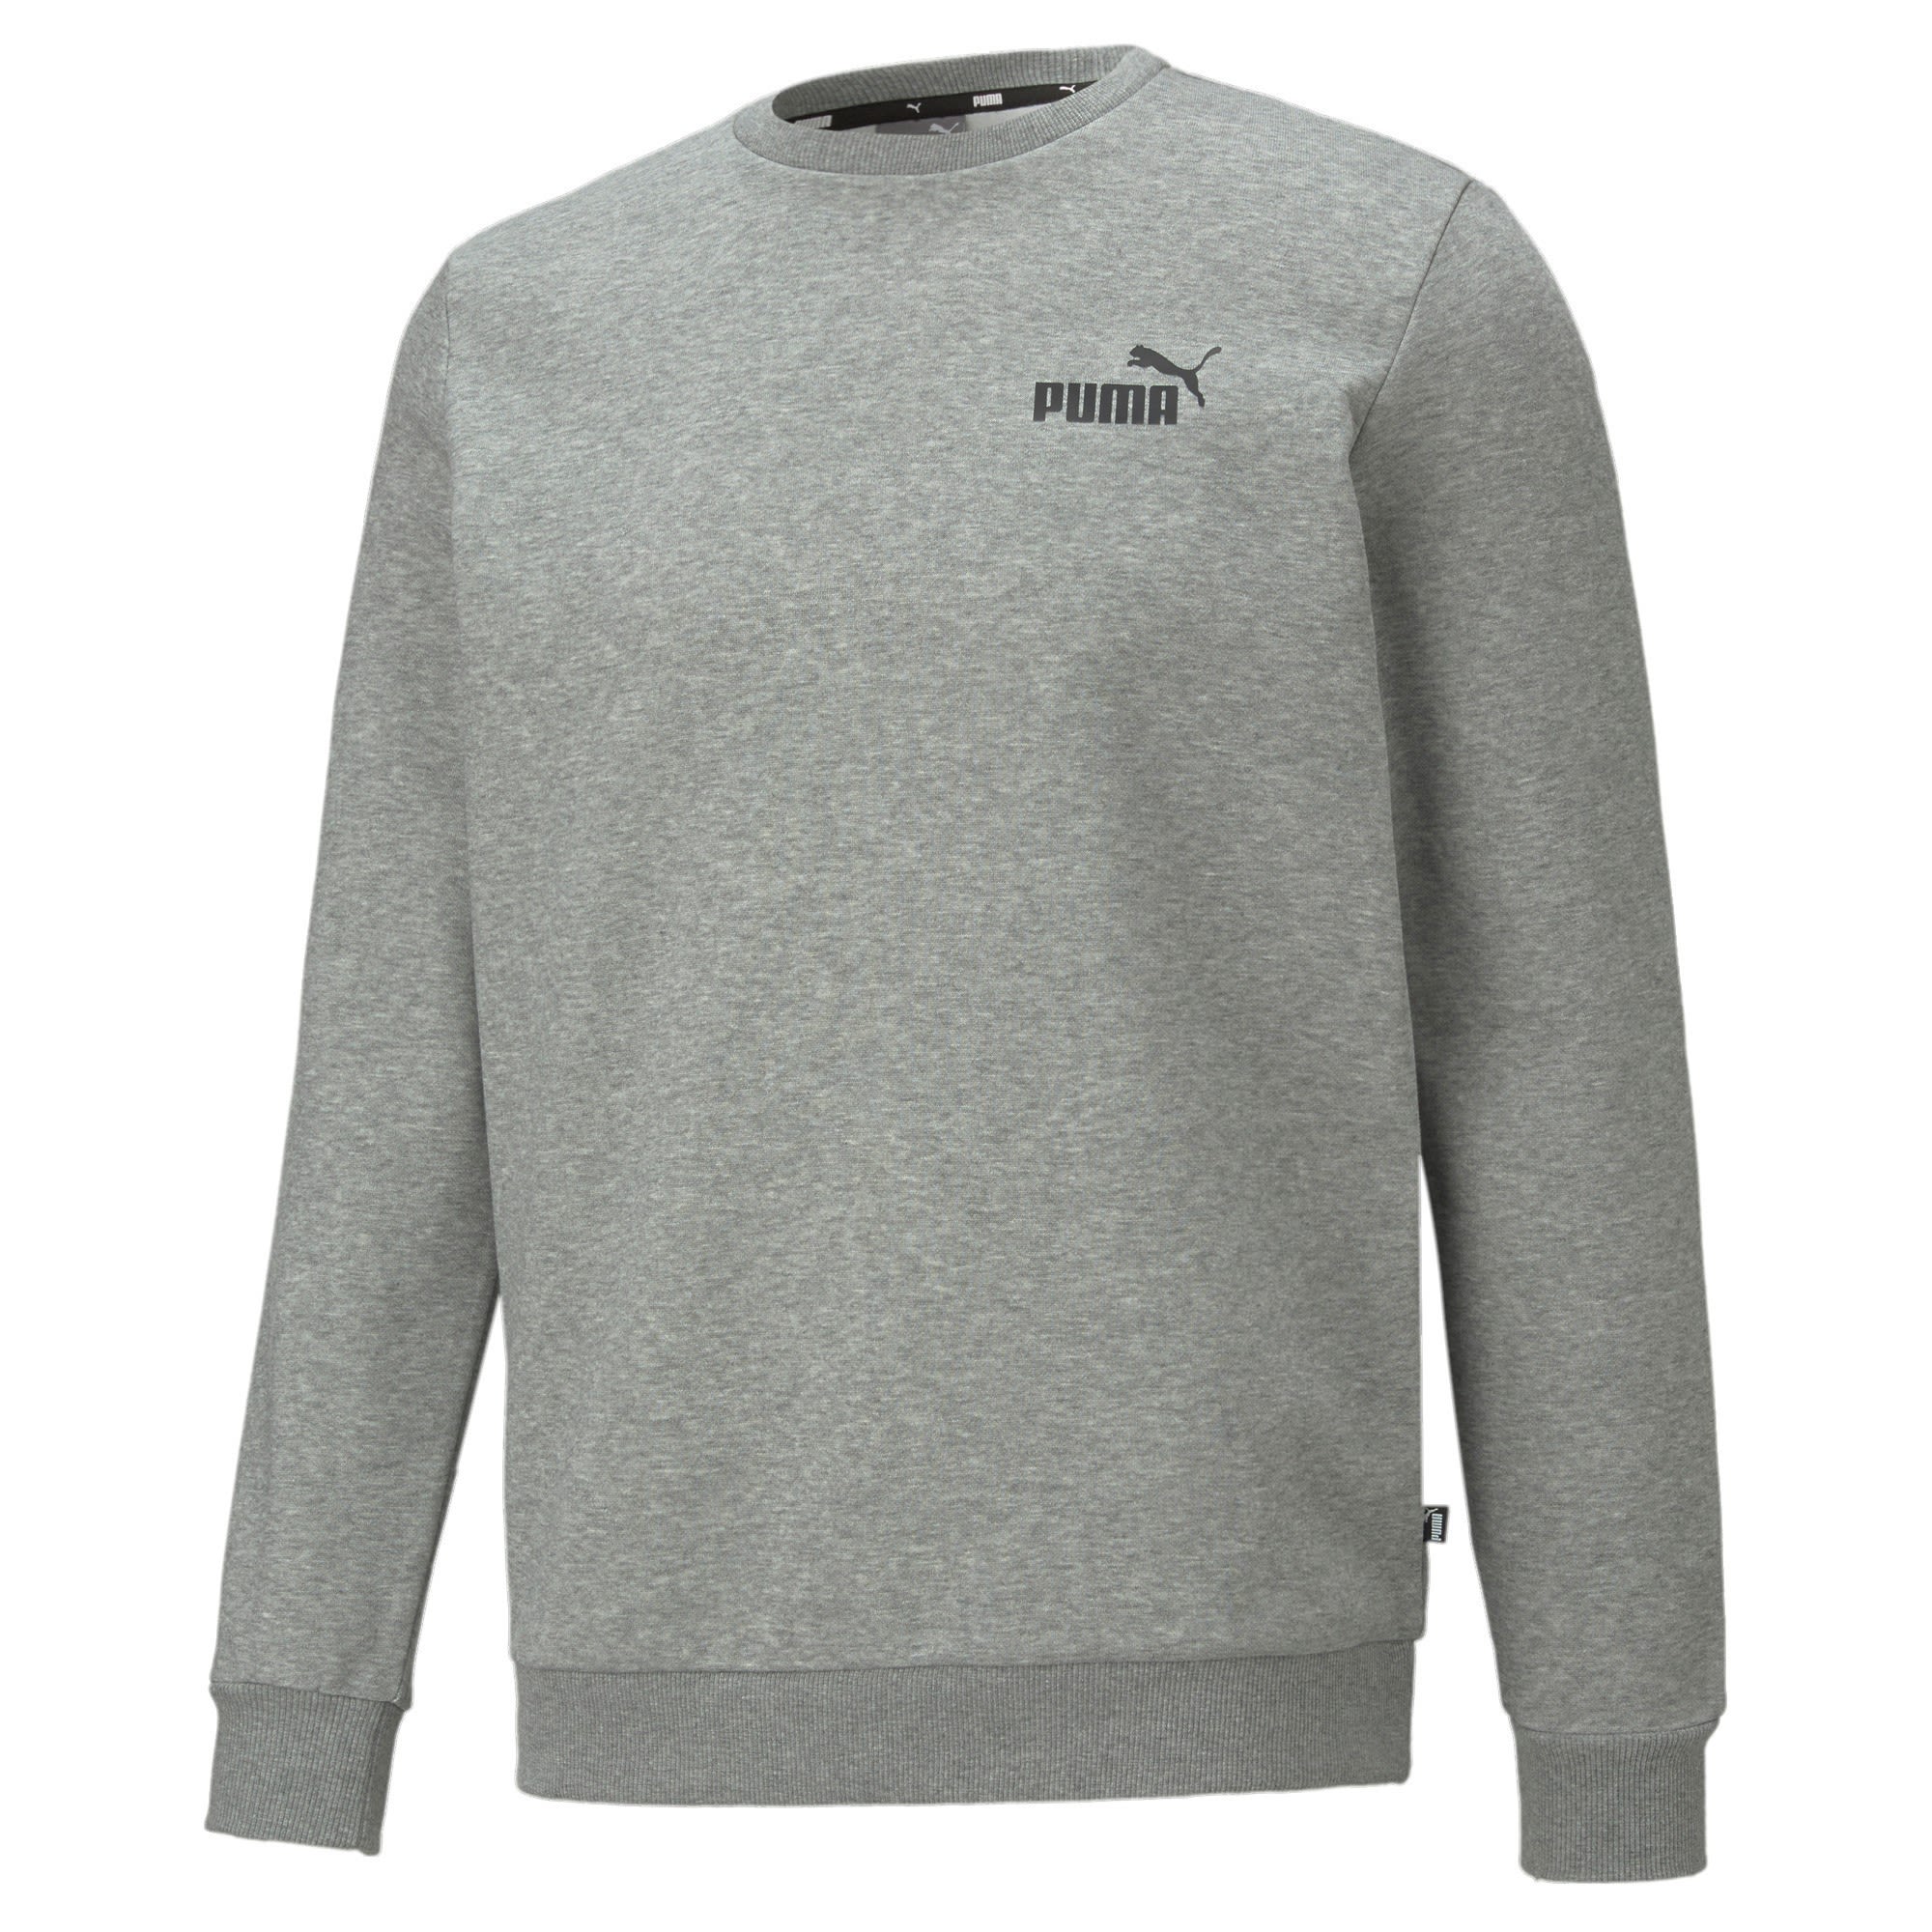 Puma Essentials Small Logo Crew FL Grau- Male Sweaters und Hoodies- Grsse S - Farbe Medium Gray Heather